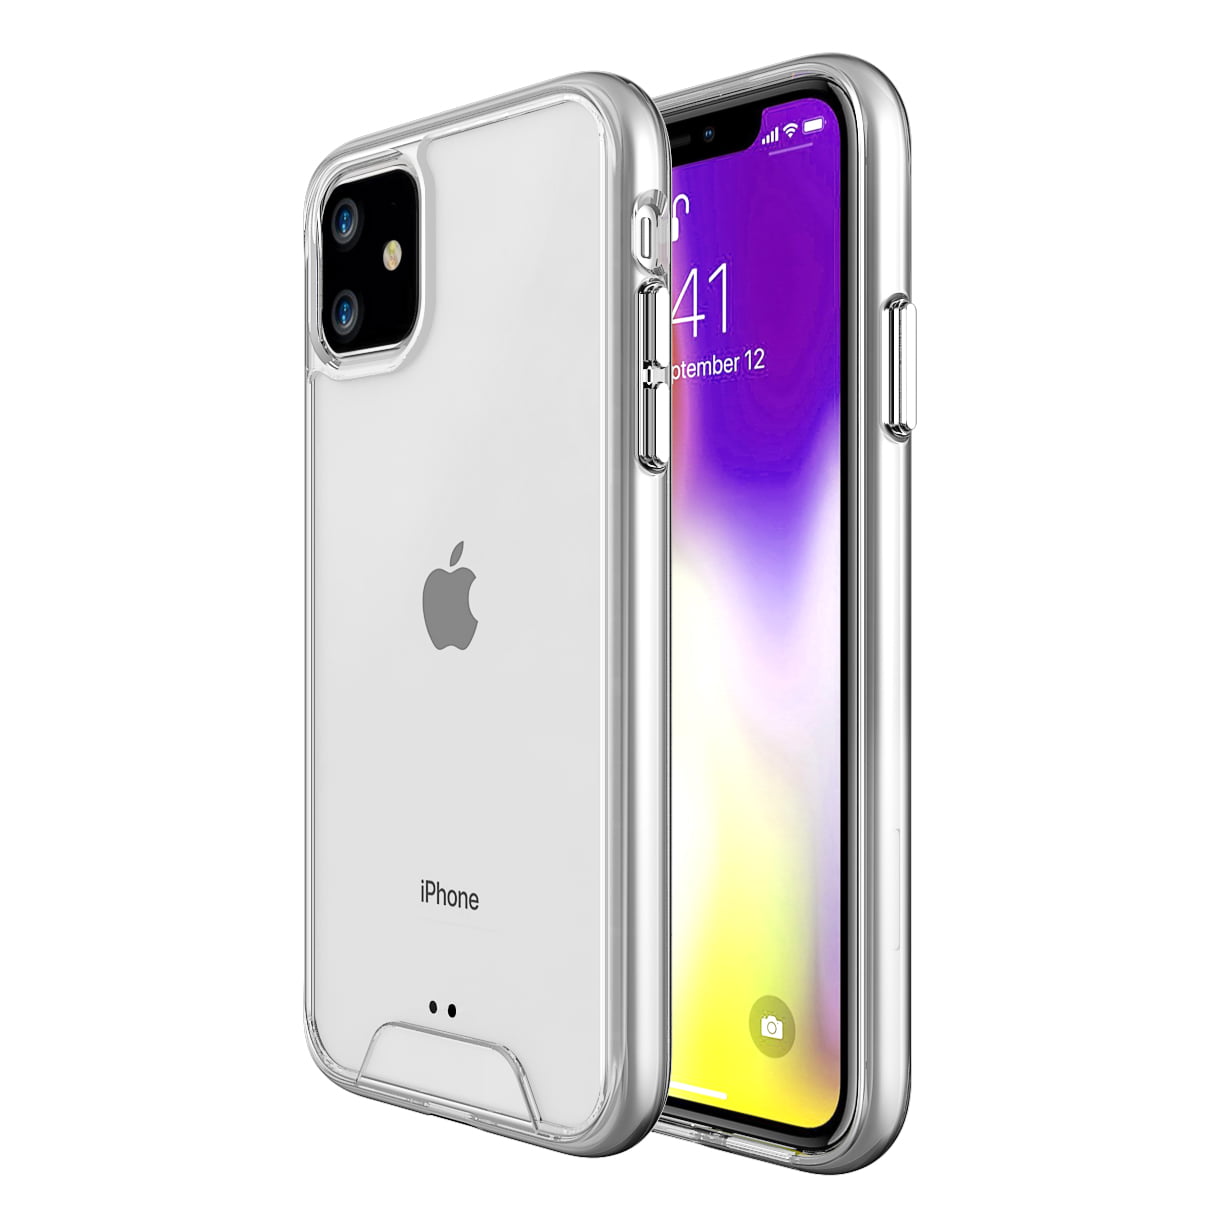 iPhone-2019-6inch-1- Fonez-Keywords : MacBook - Fonez.ie - laptop- Tablet - Sim free - Unlock - Phones - iphone - android - macbook pro - apple macbook- fonez -samsung - samsung book-sale - best price - deal